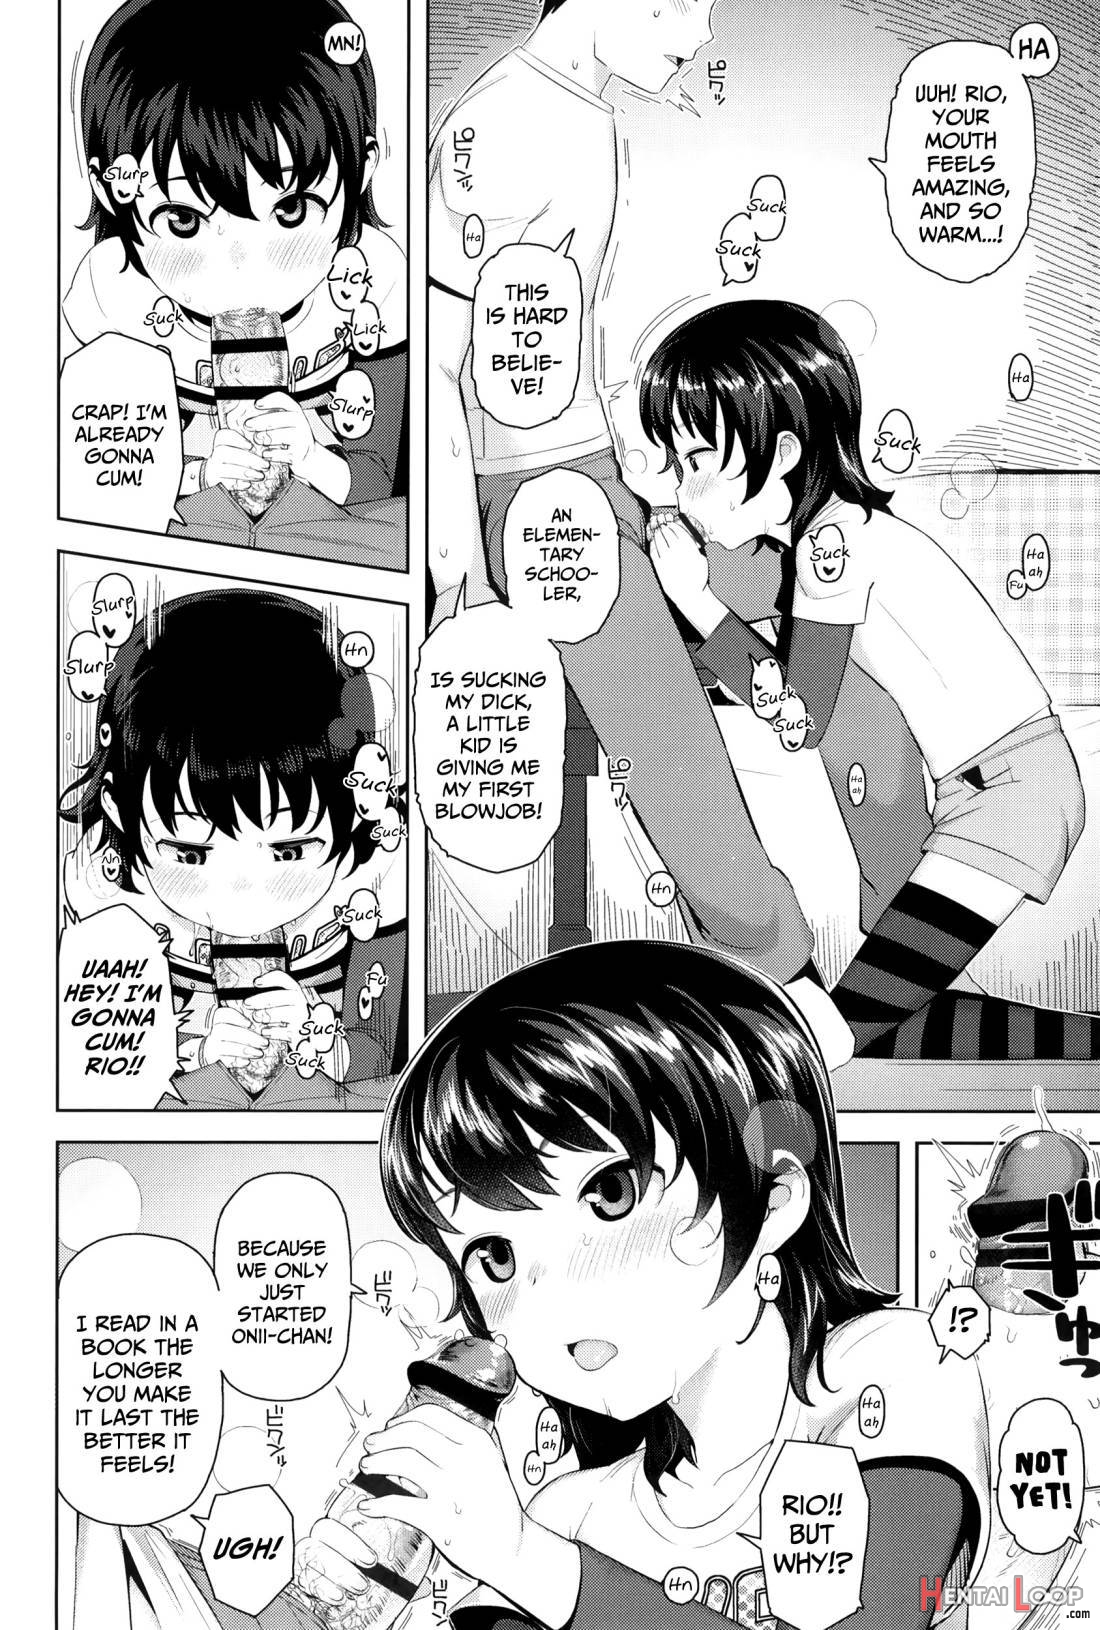 Kyou wa Nani shiyou ka? page 55